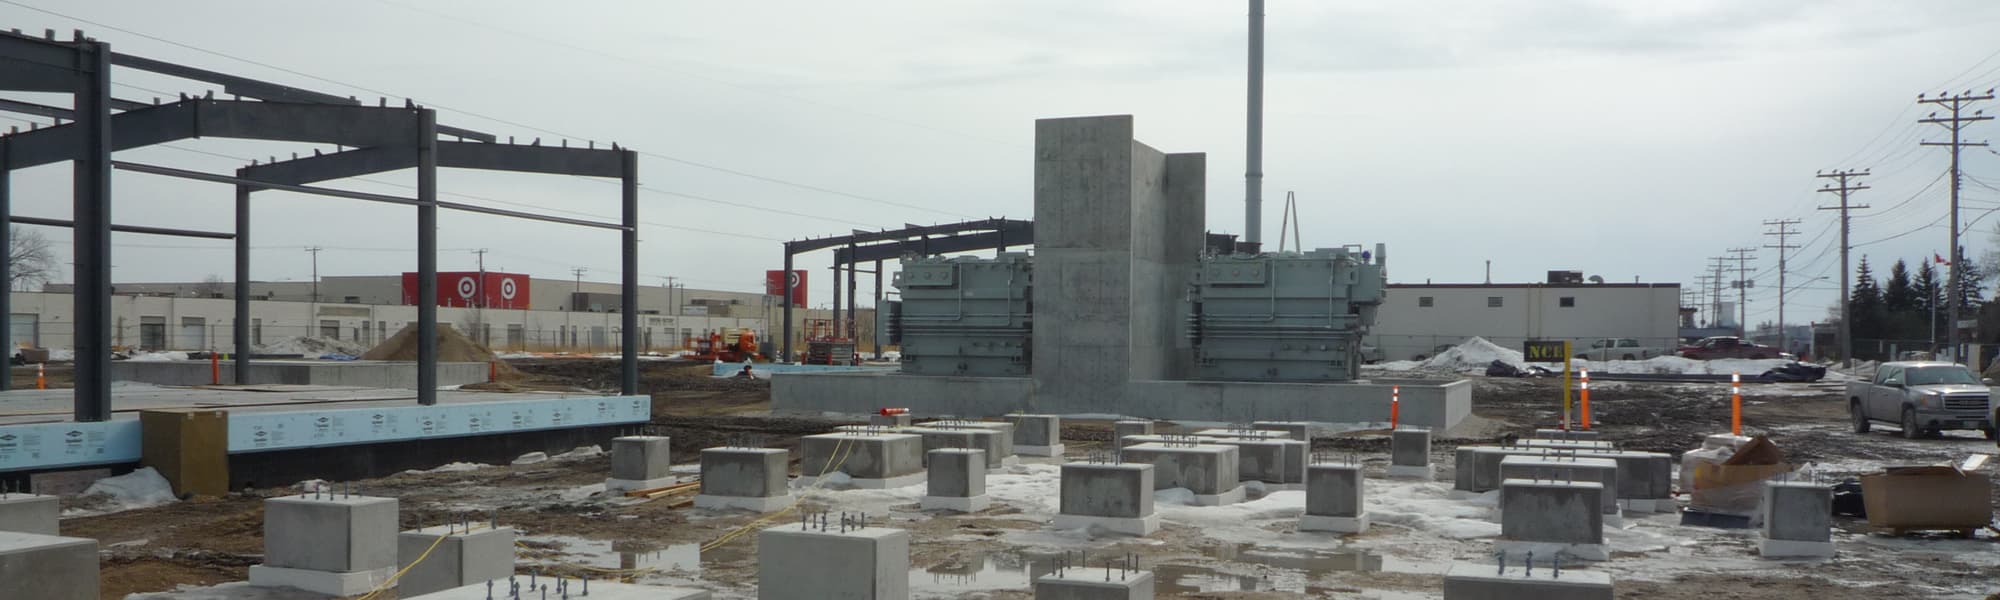 DGH Civil Engineering and Drainage Plans Winnipeg